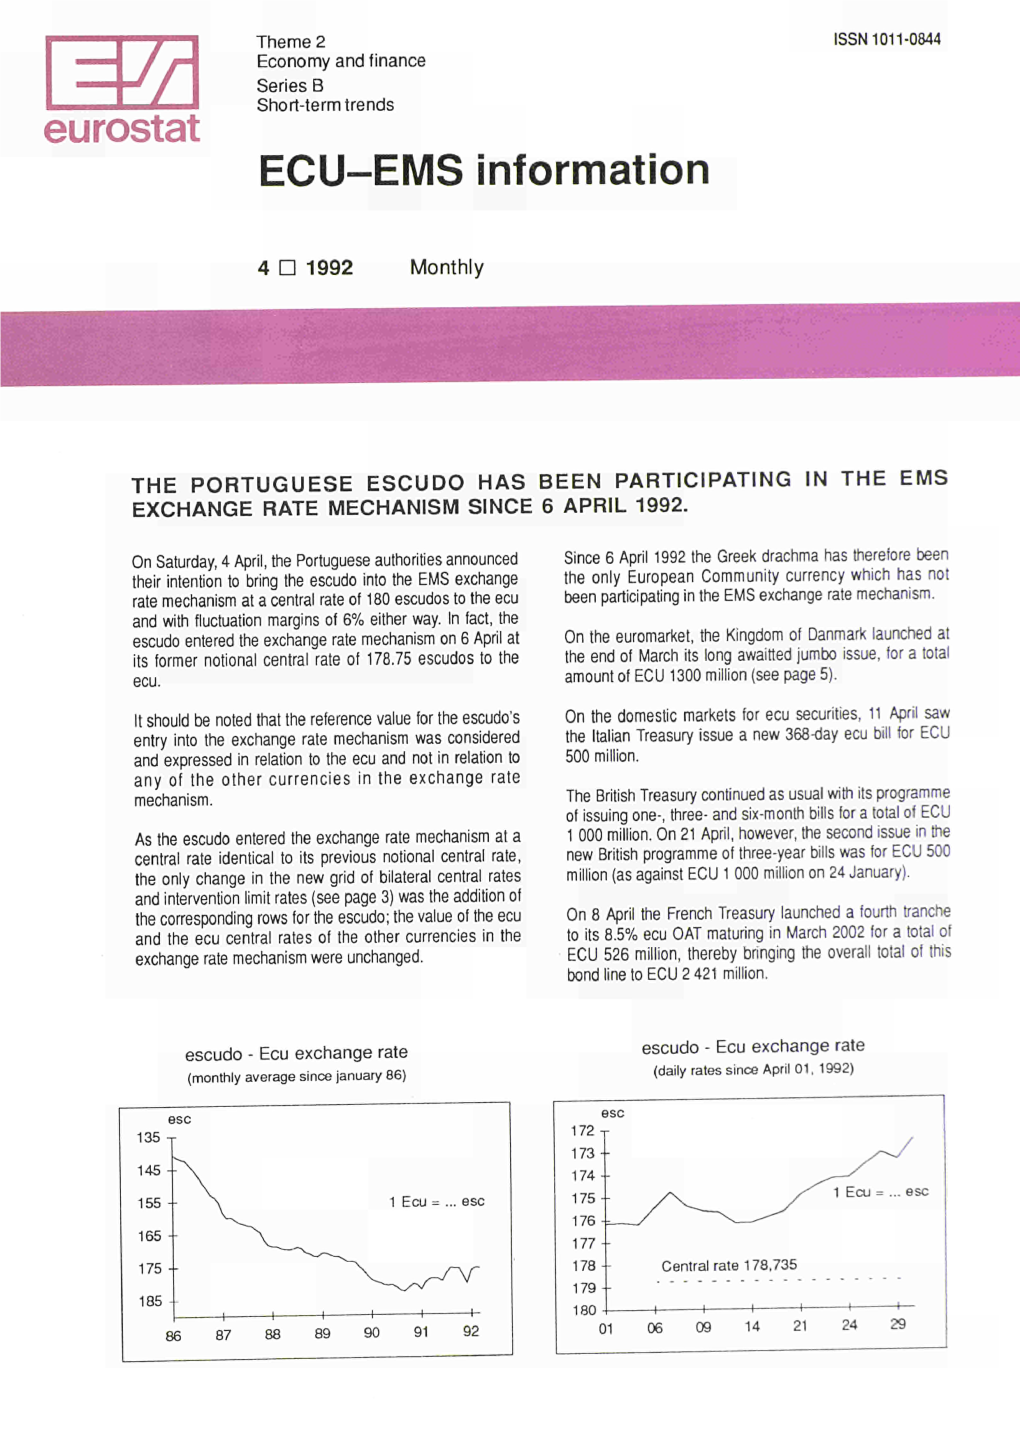 ECU-EMS Information : 4/1992 Monthly